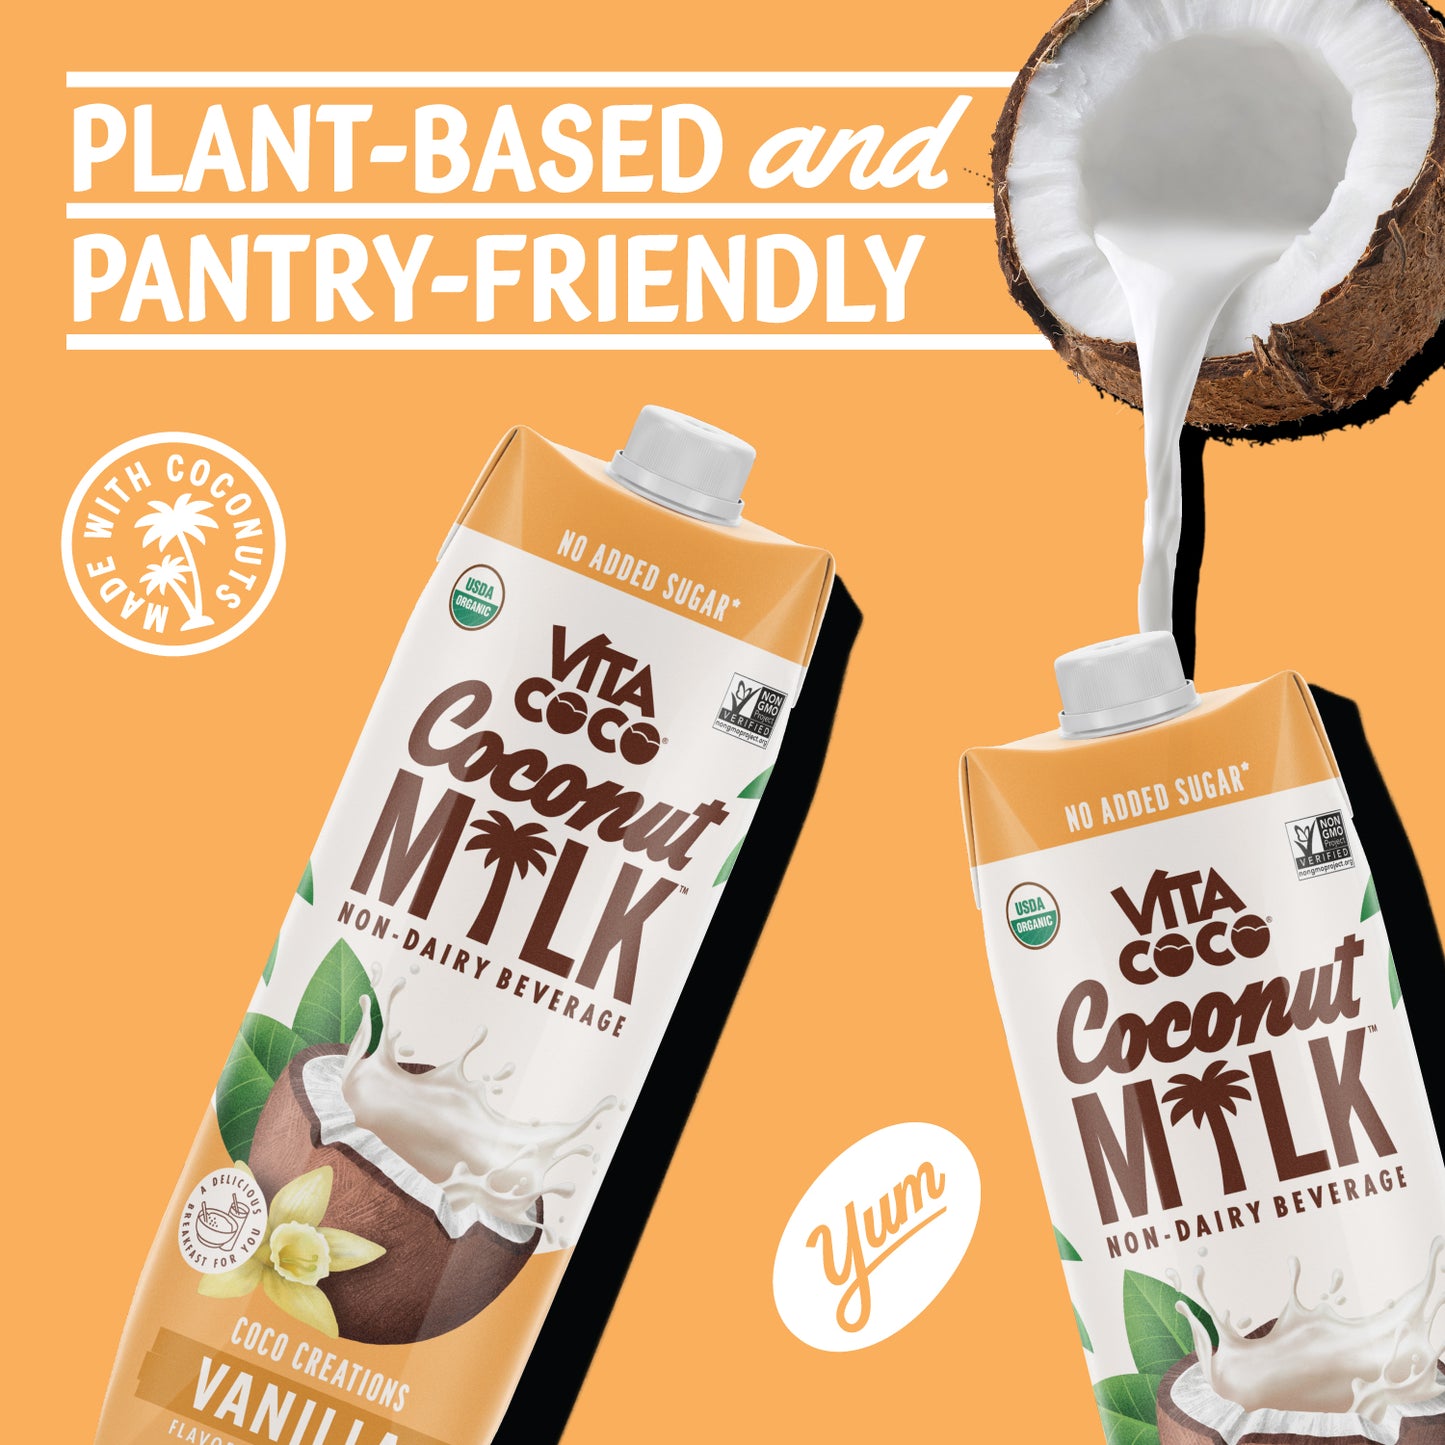 Vita Coco Vanilla Organic Coconut Milk| Plant Based| Dairy Free Milk Alternative| Gluten Free| Unsweetened - 33.8 Fl Oz (Pack of 6)